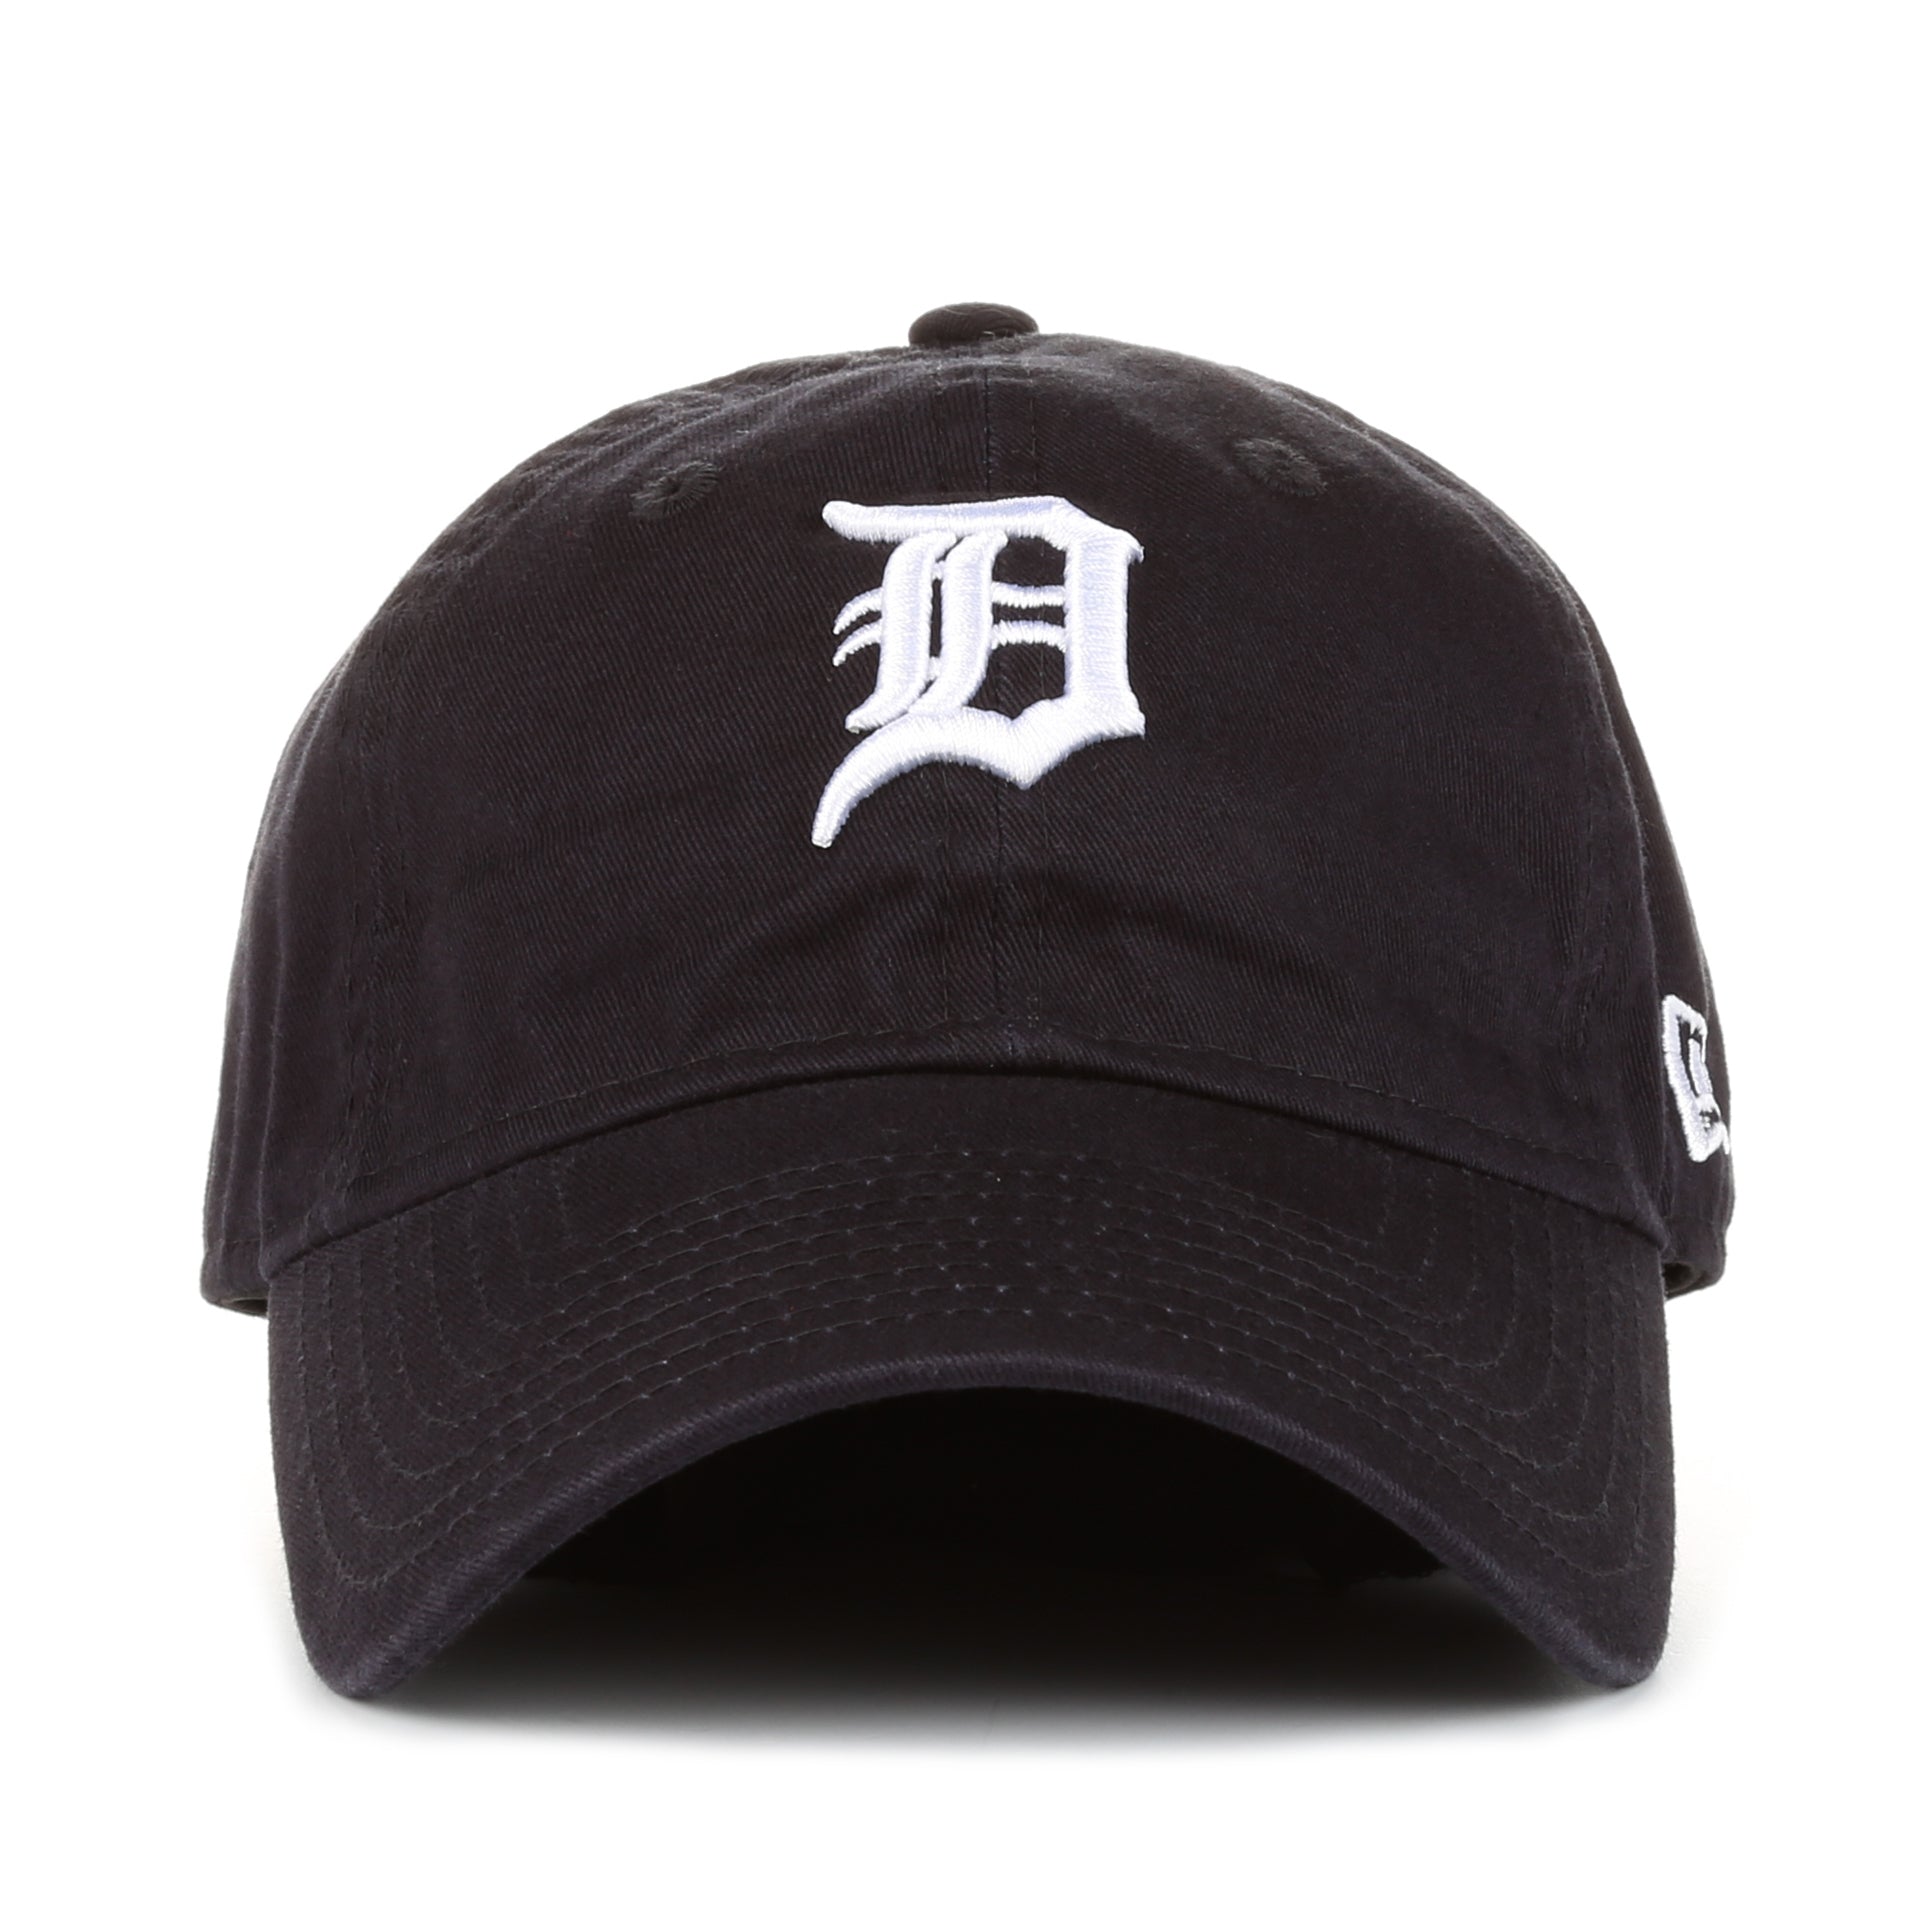 New Era 9Twenty Camo Shade Cap - Detroit Tigers/Black - New Star